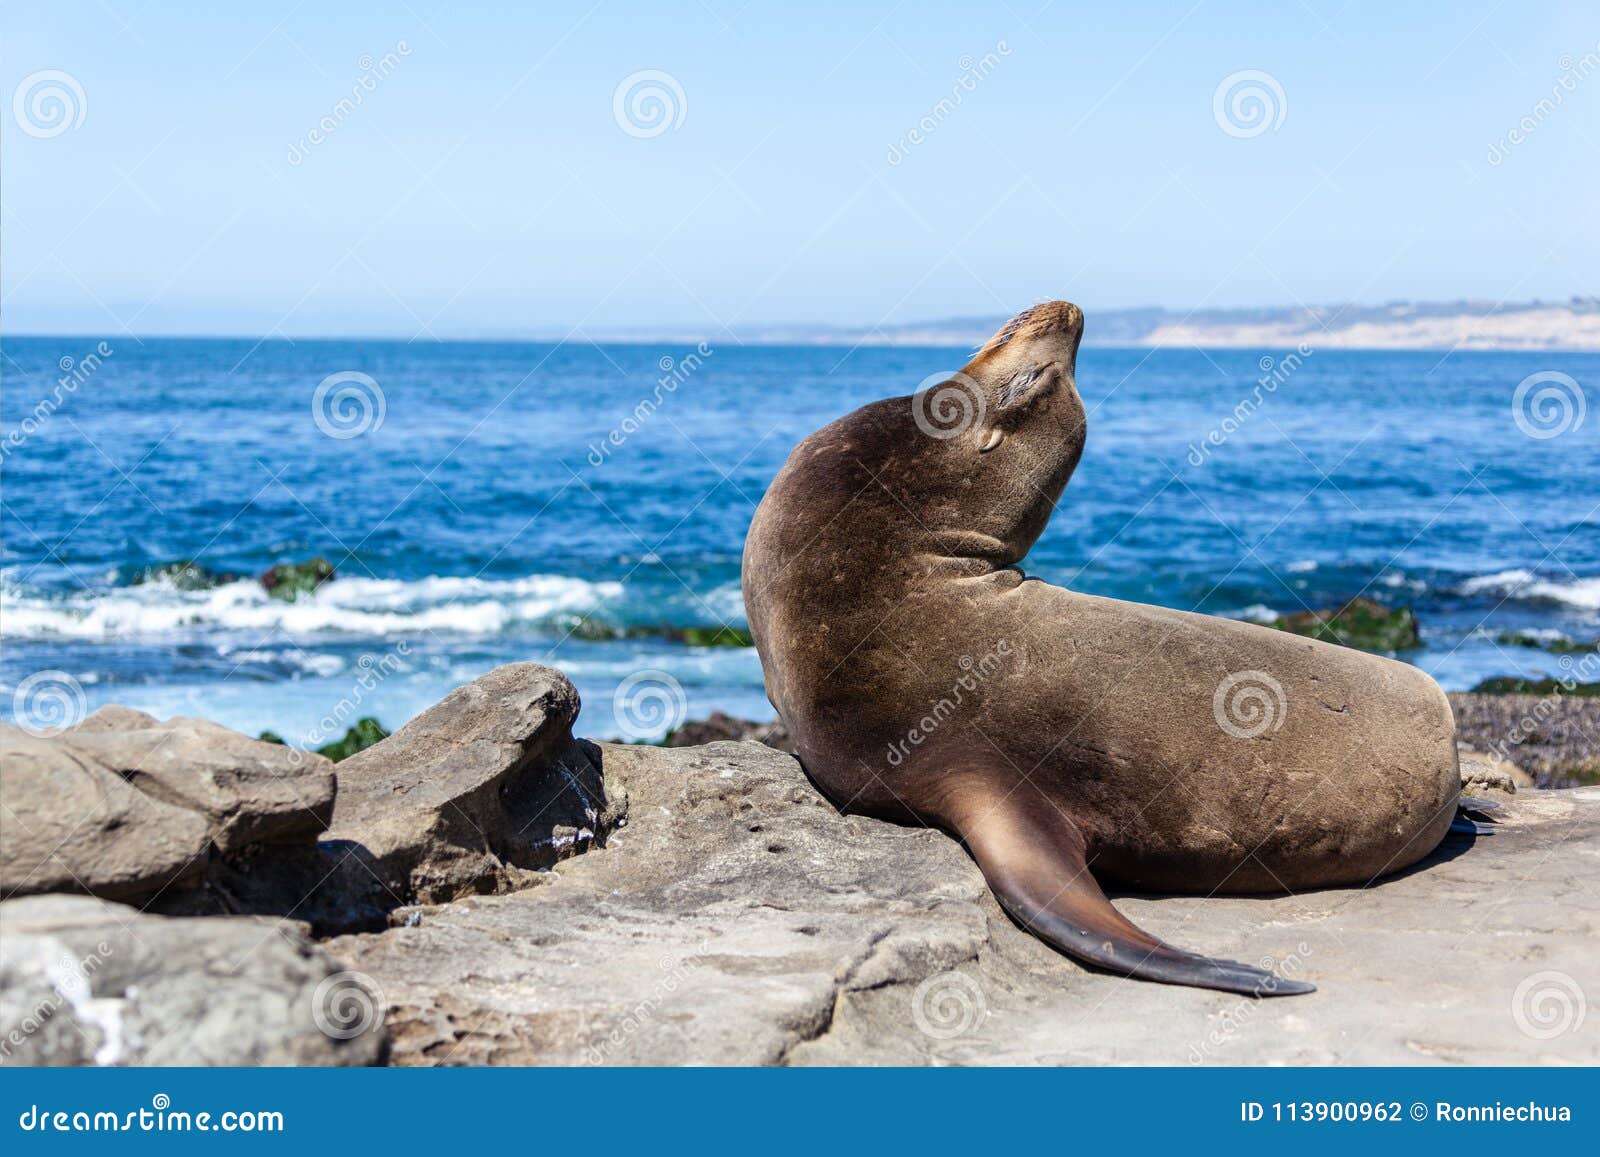 california sea lion zalophus californianus in la jolla